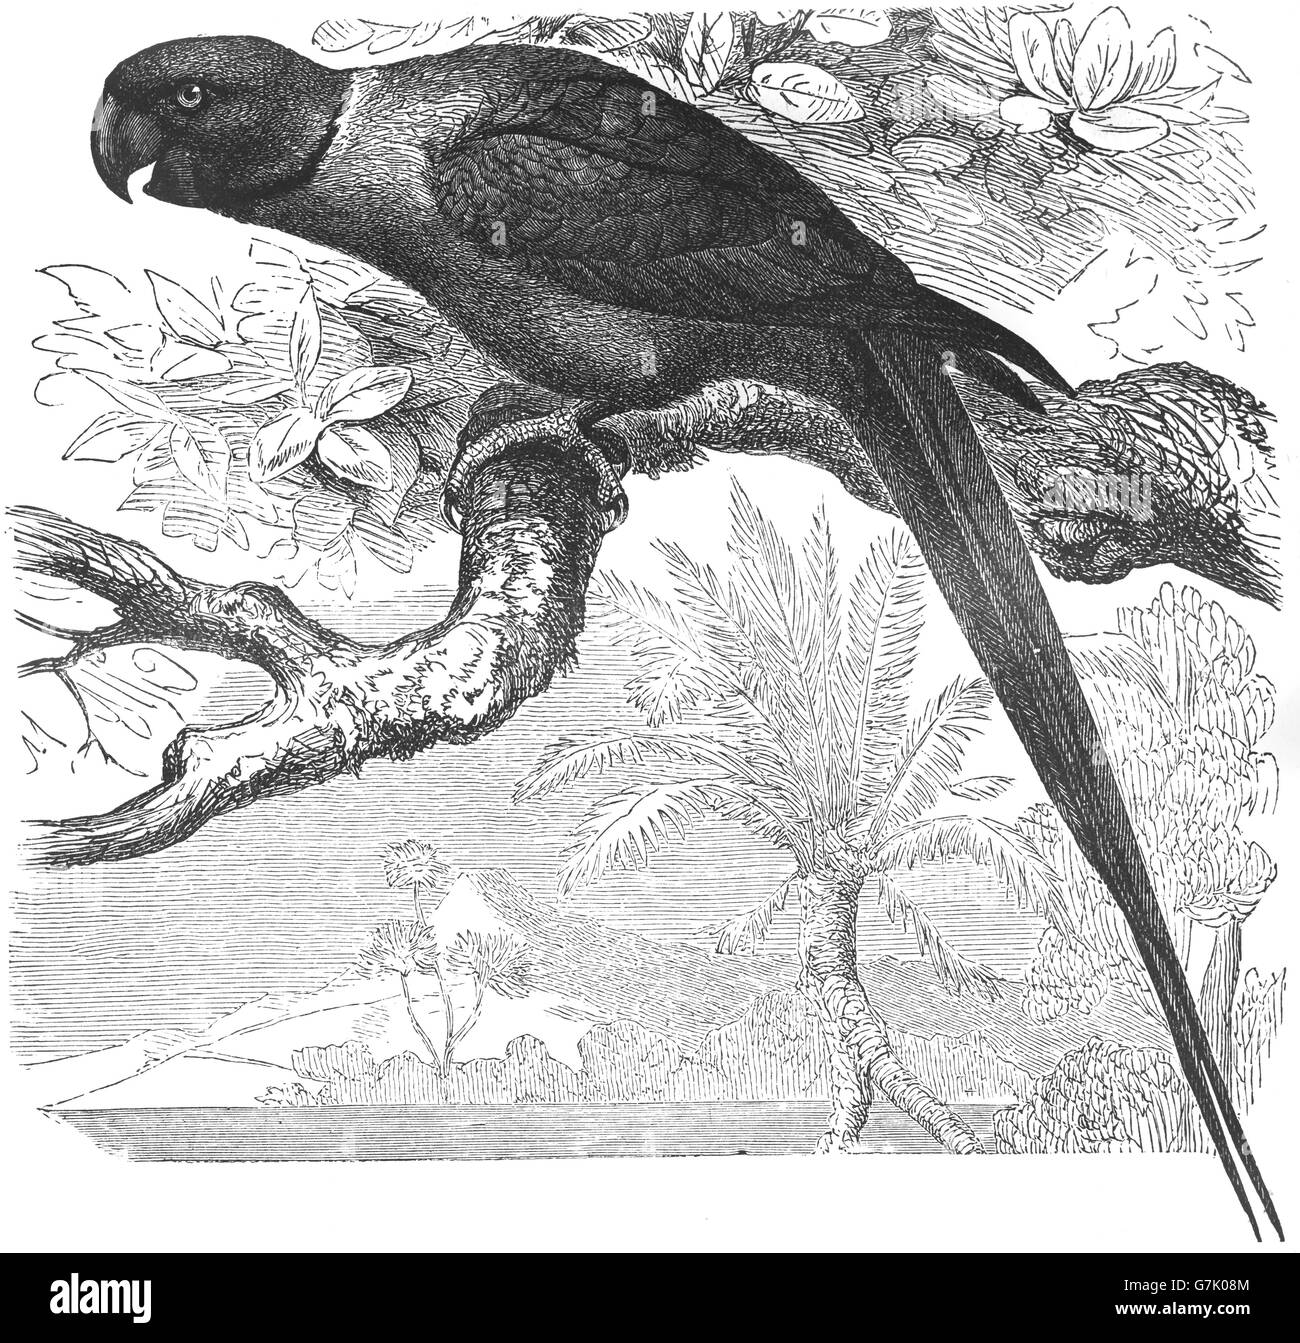 Rose-ringed parakeet, Psittacula krameri, ring-necked parakeet, illustration from book dated 1904 Stock Photo